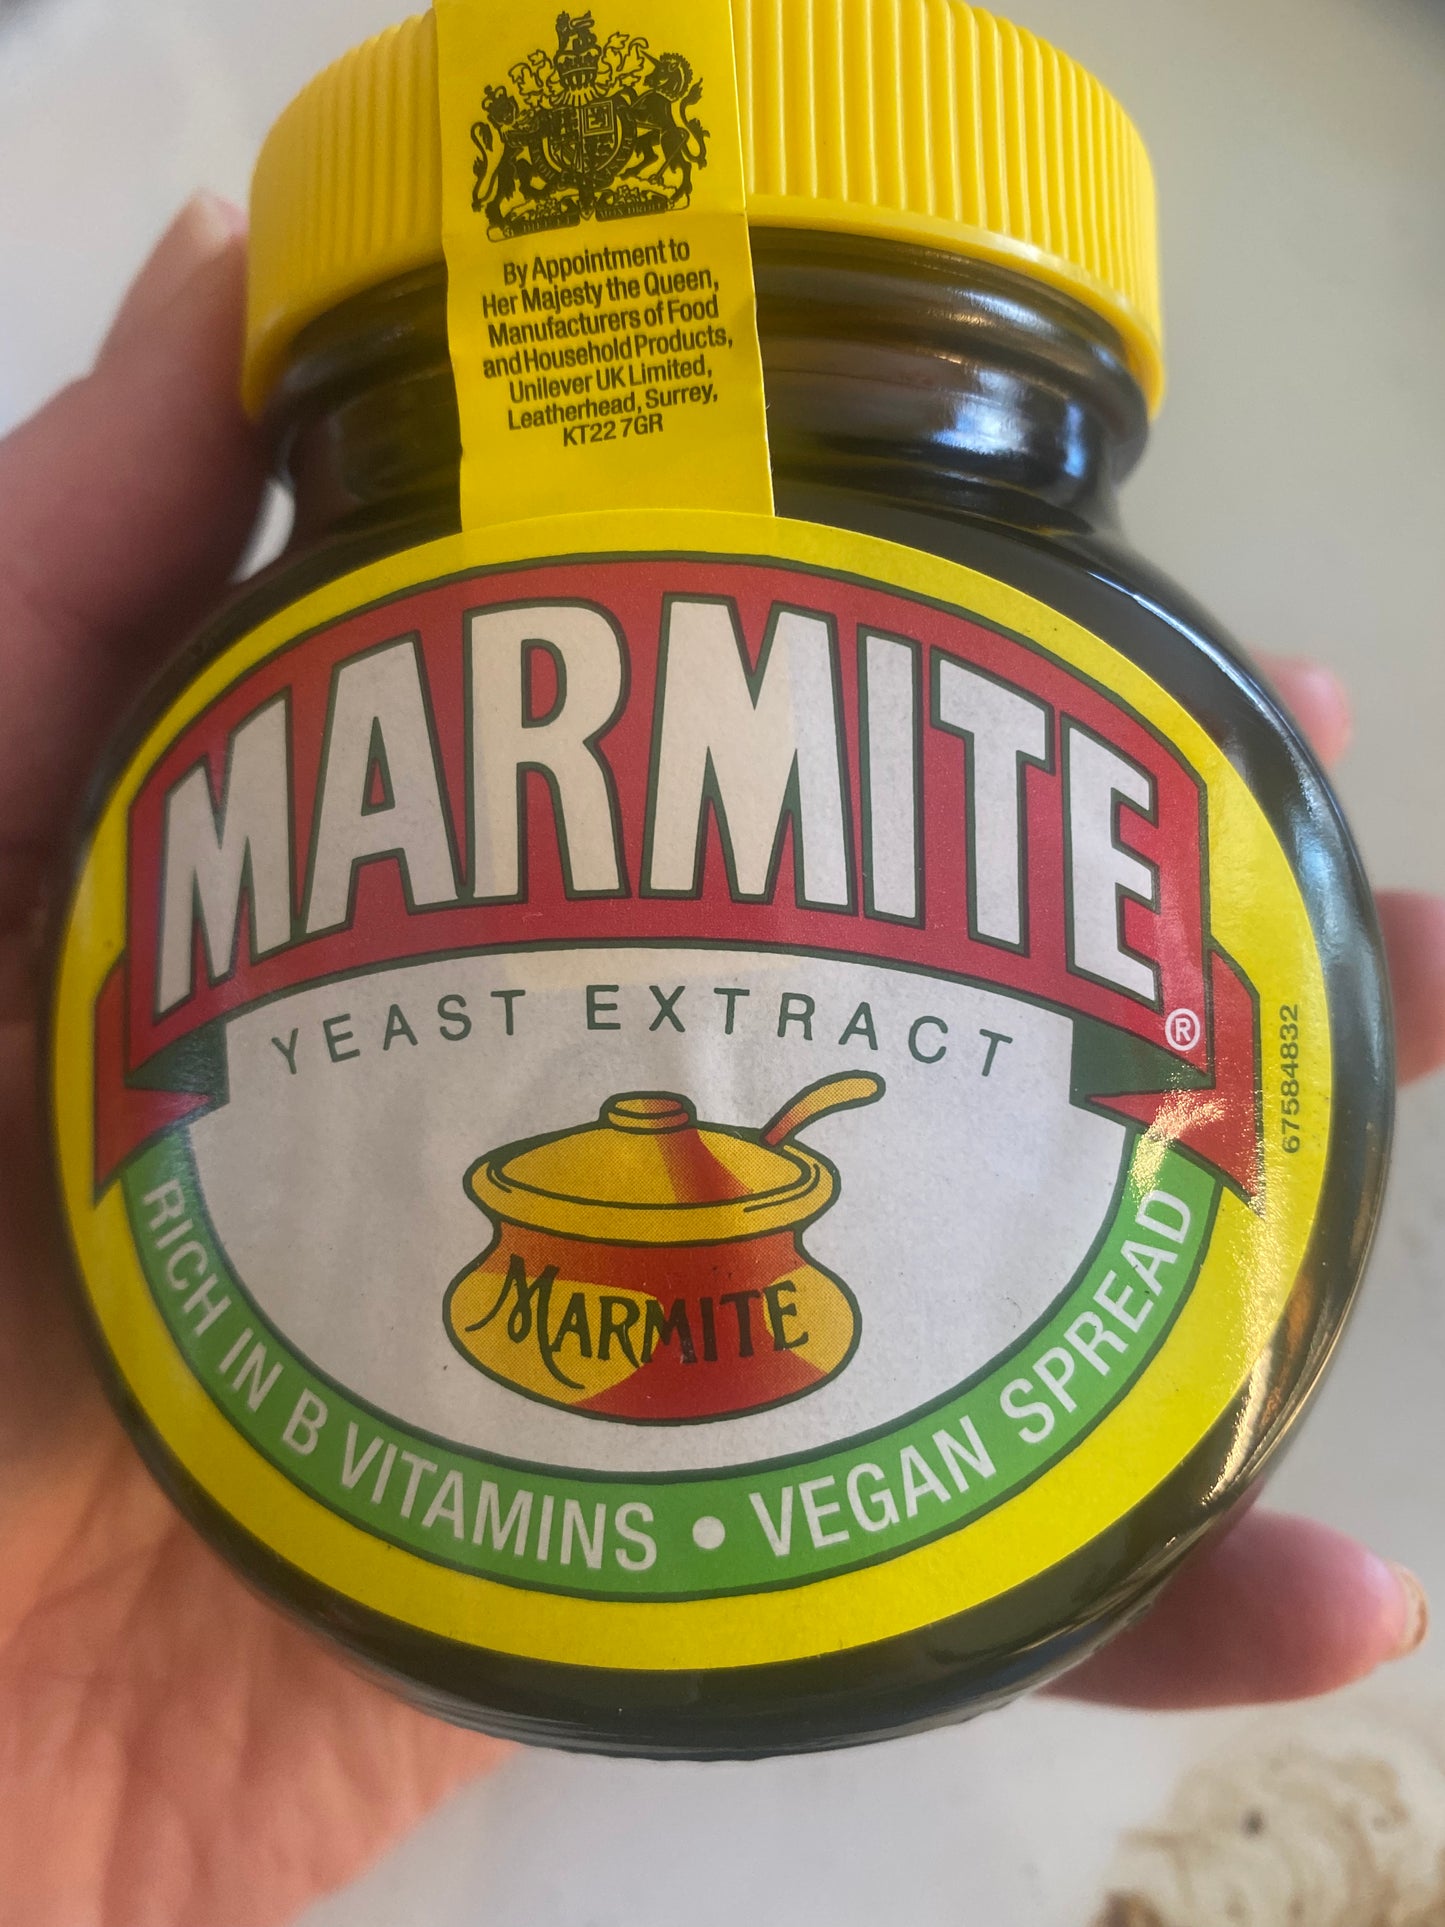 Marmite